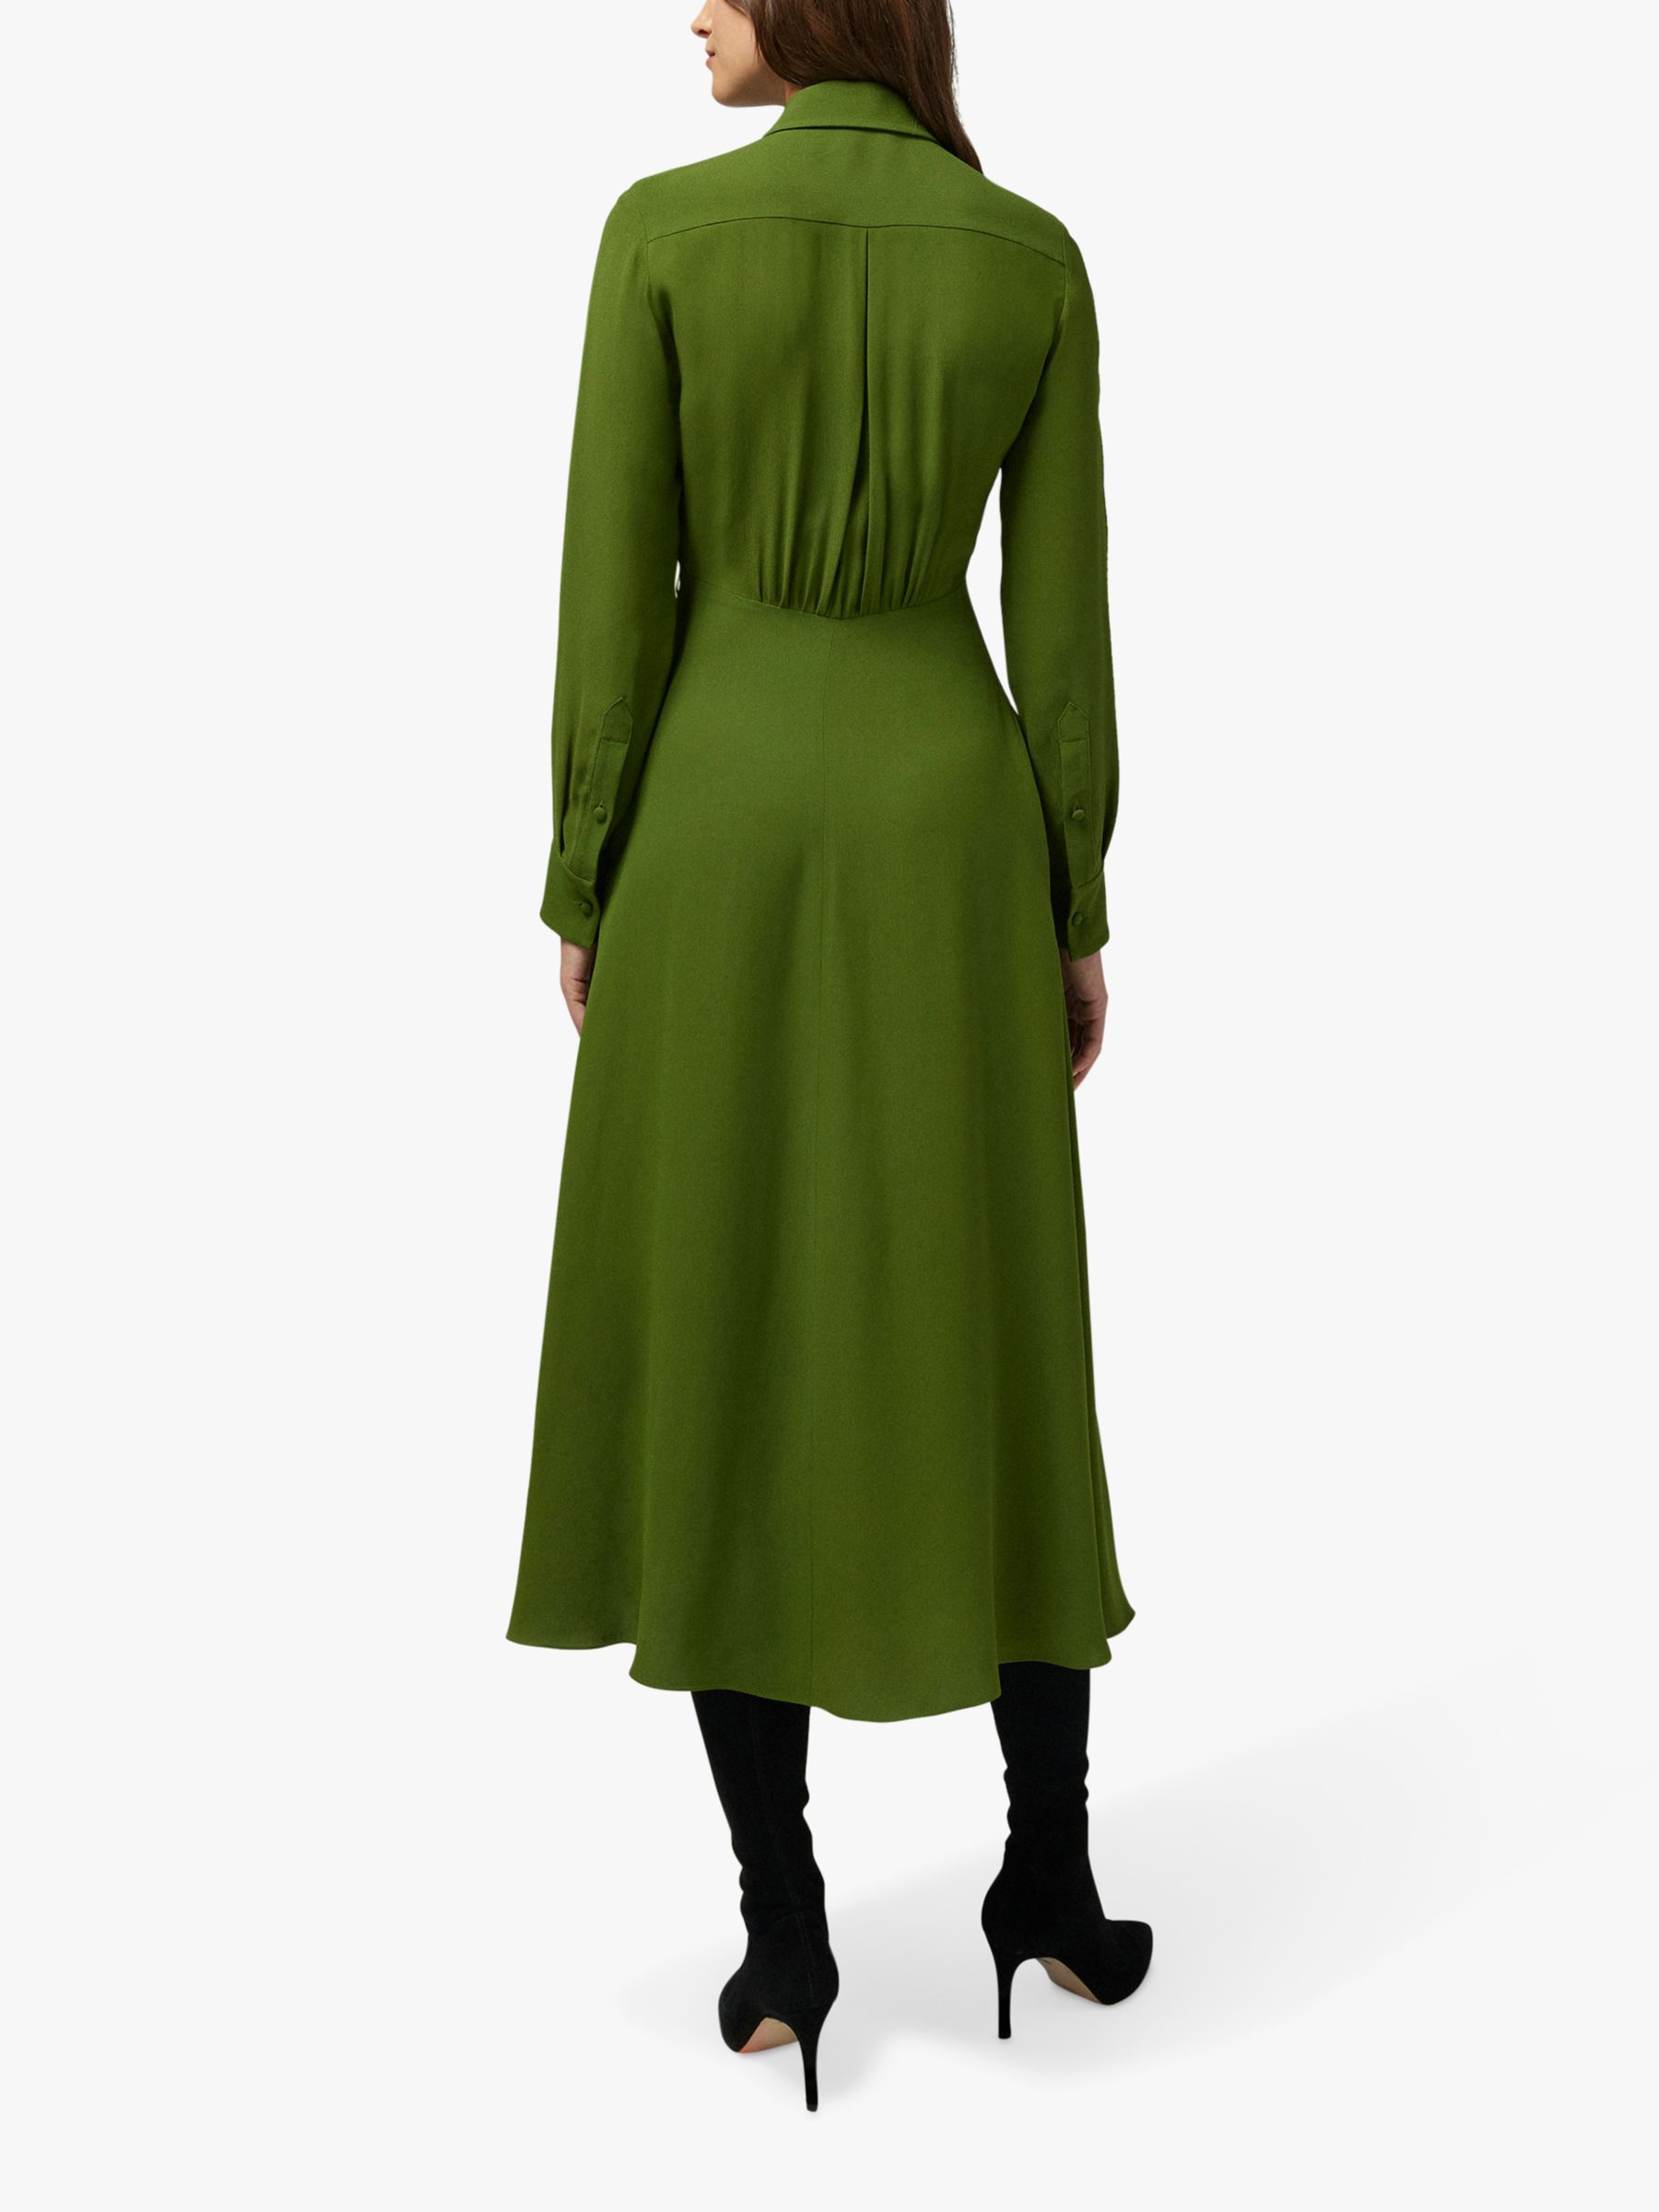 Buy Jasper Conran Claudia Empire Line Crepe Midi Dress Online at johnlewis.com